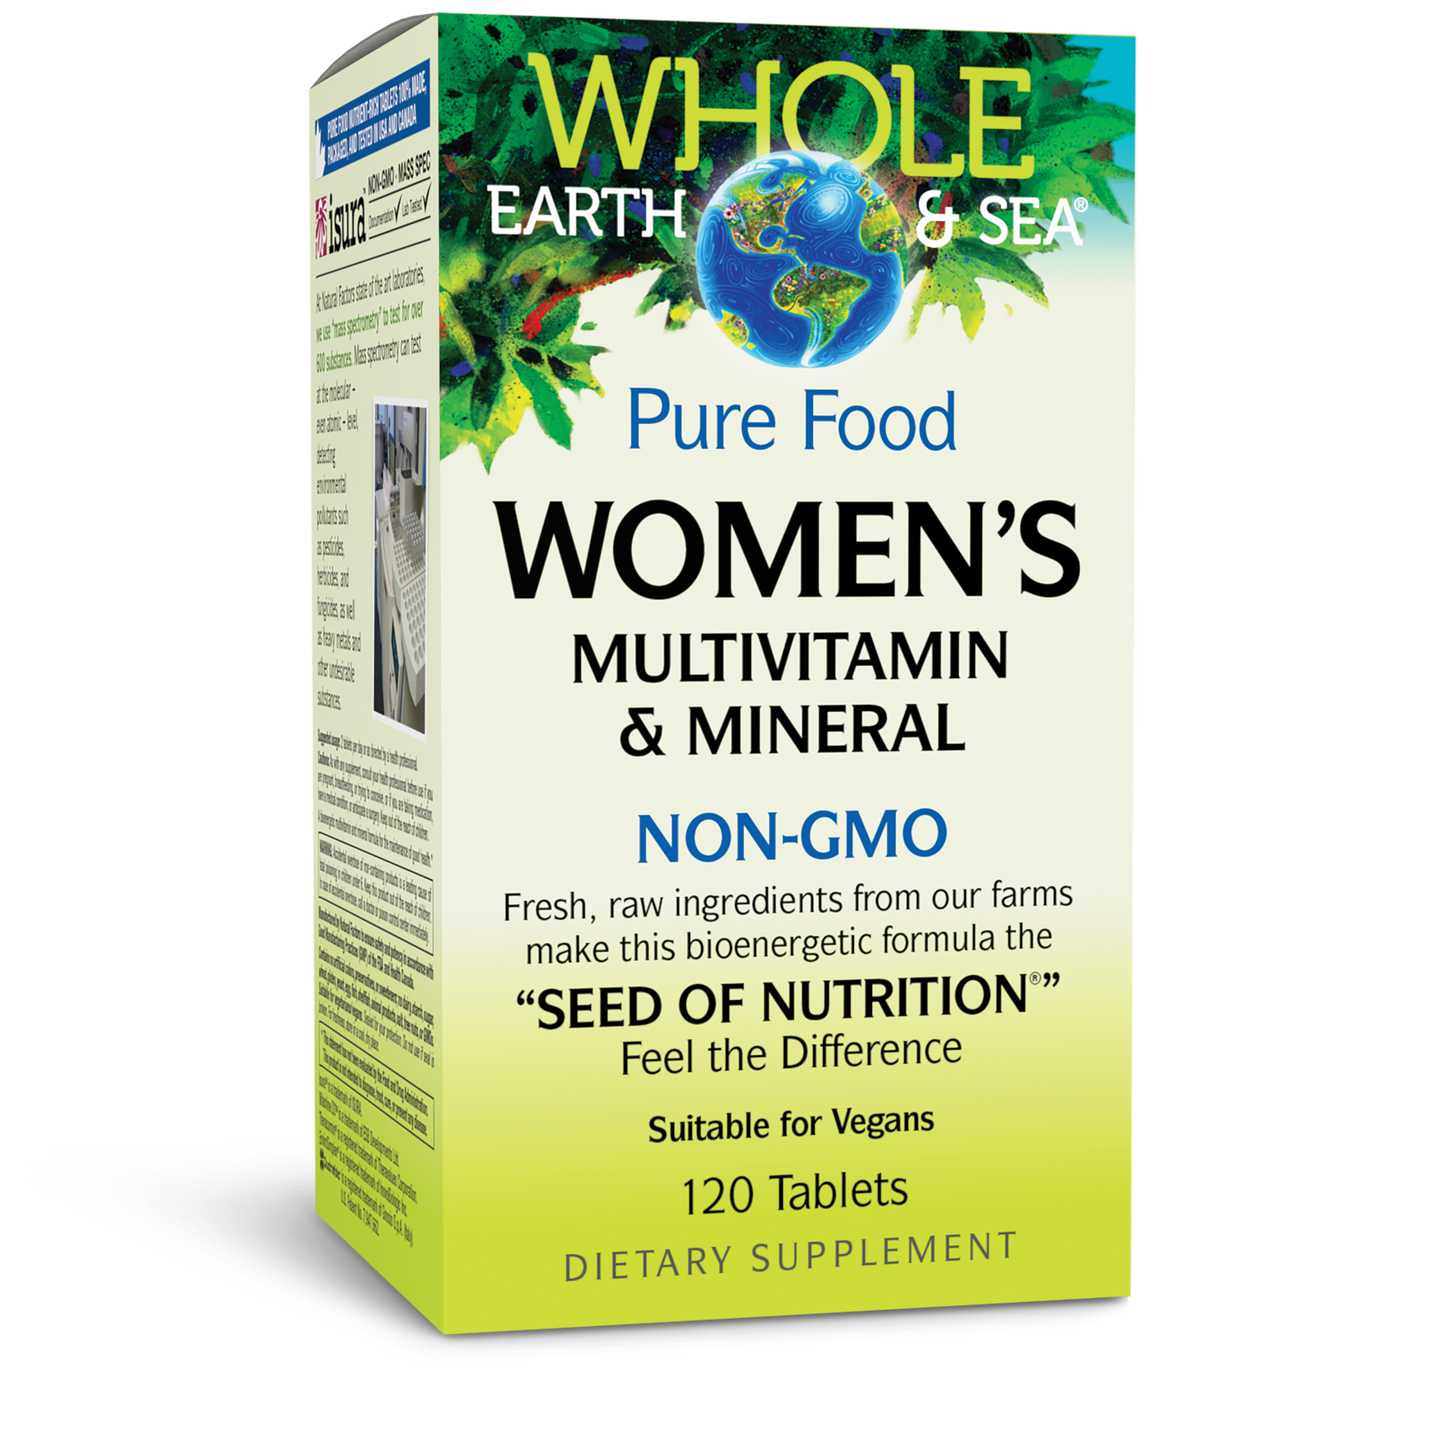 Women's Multivitamin & Mineral|variant|hi-res|35520U